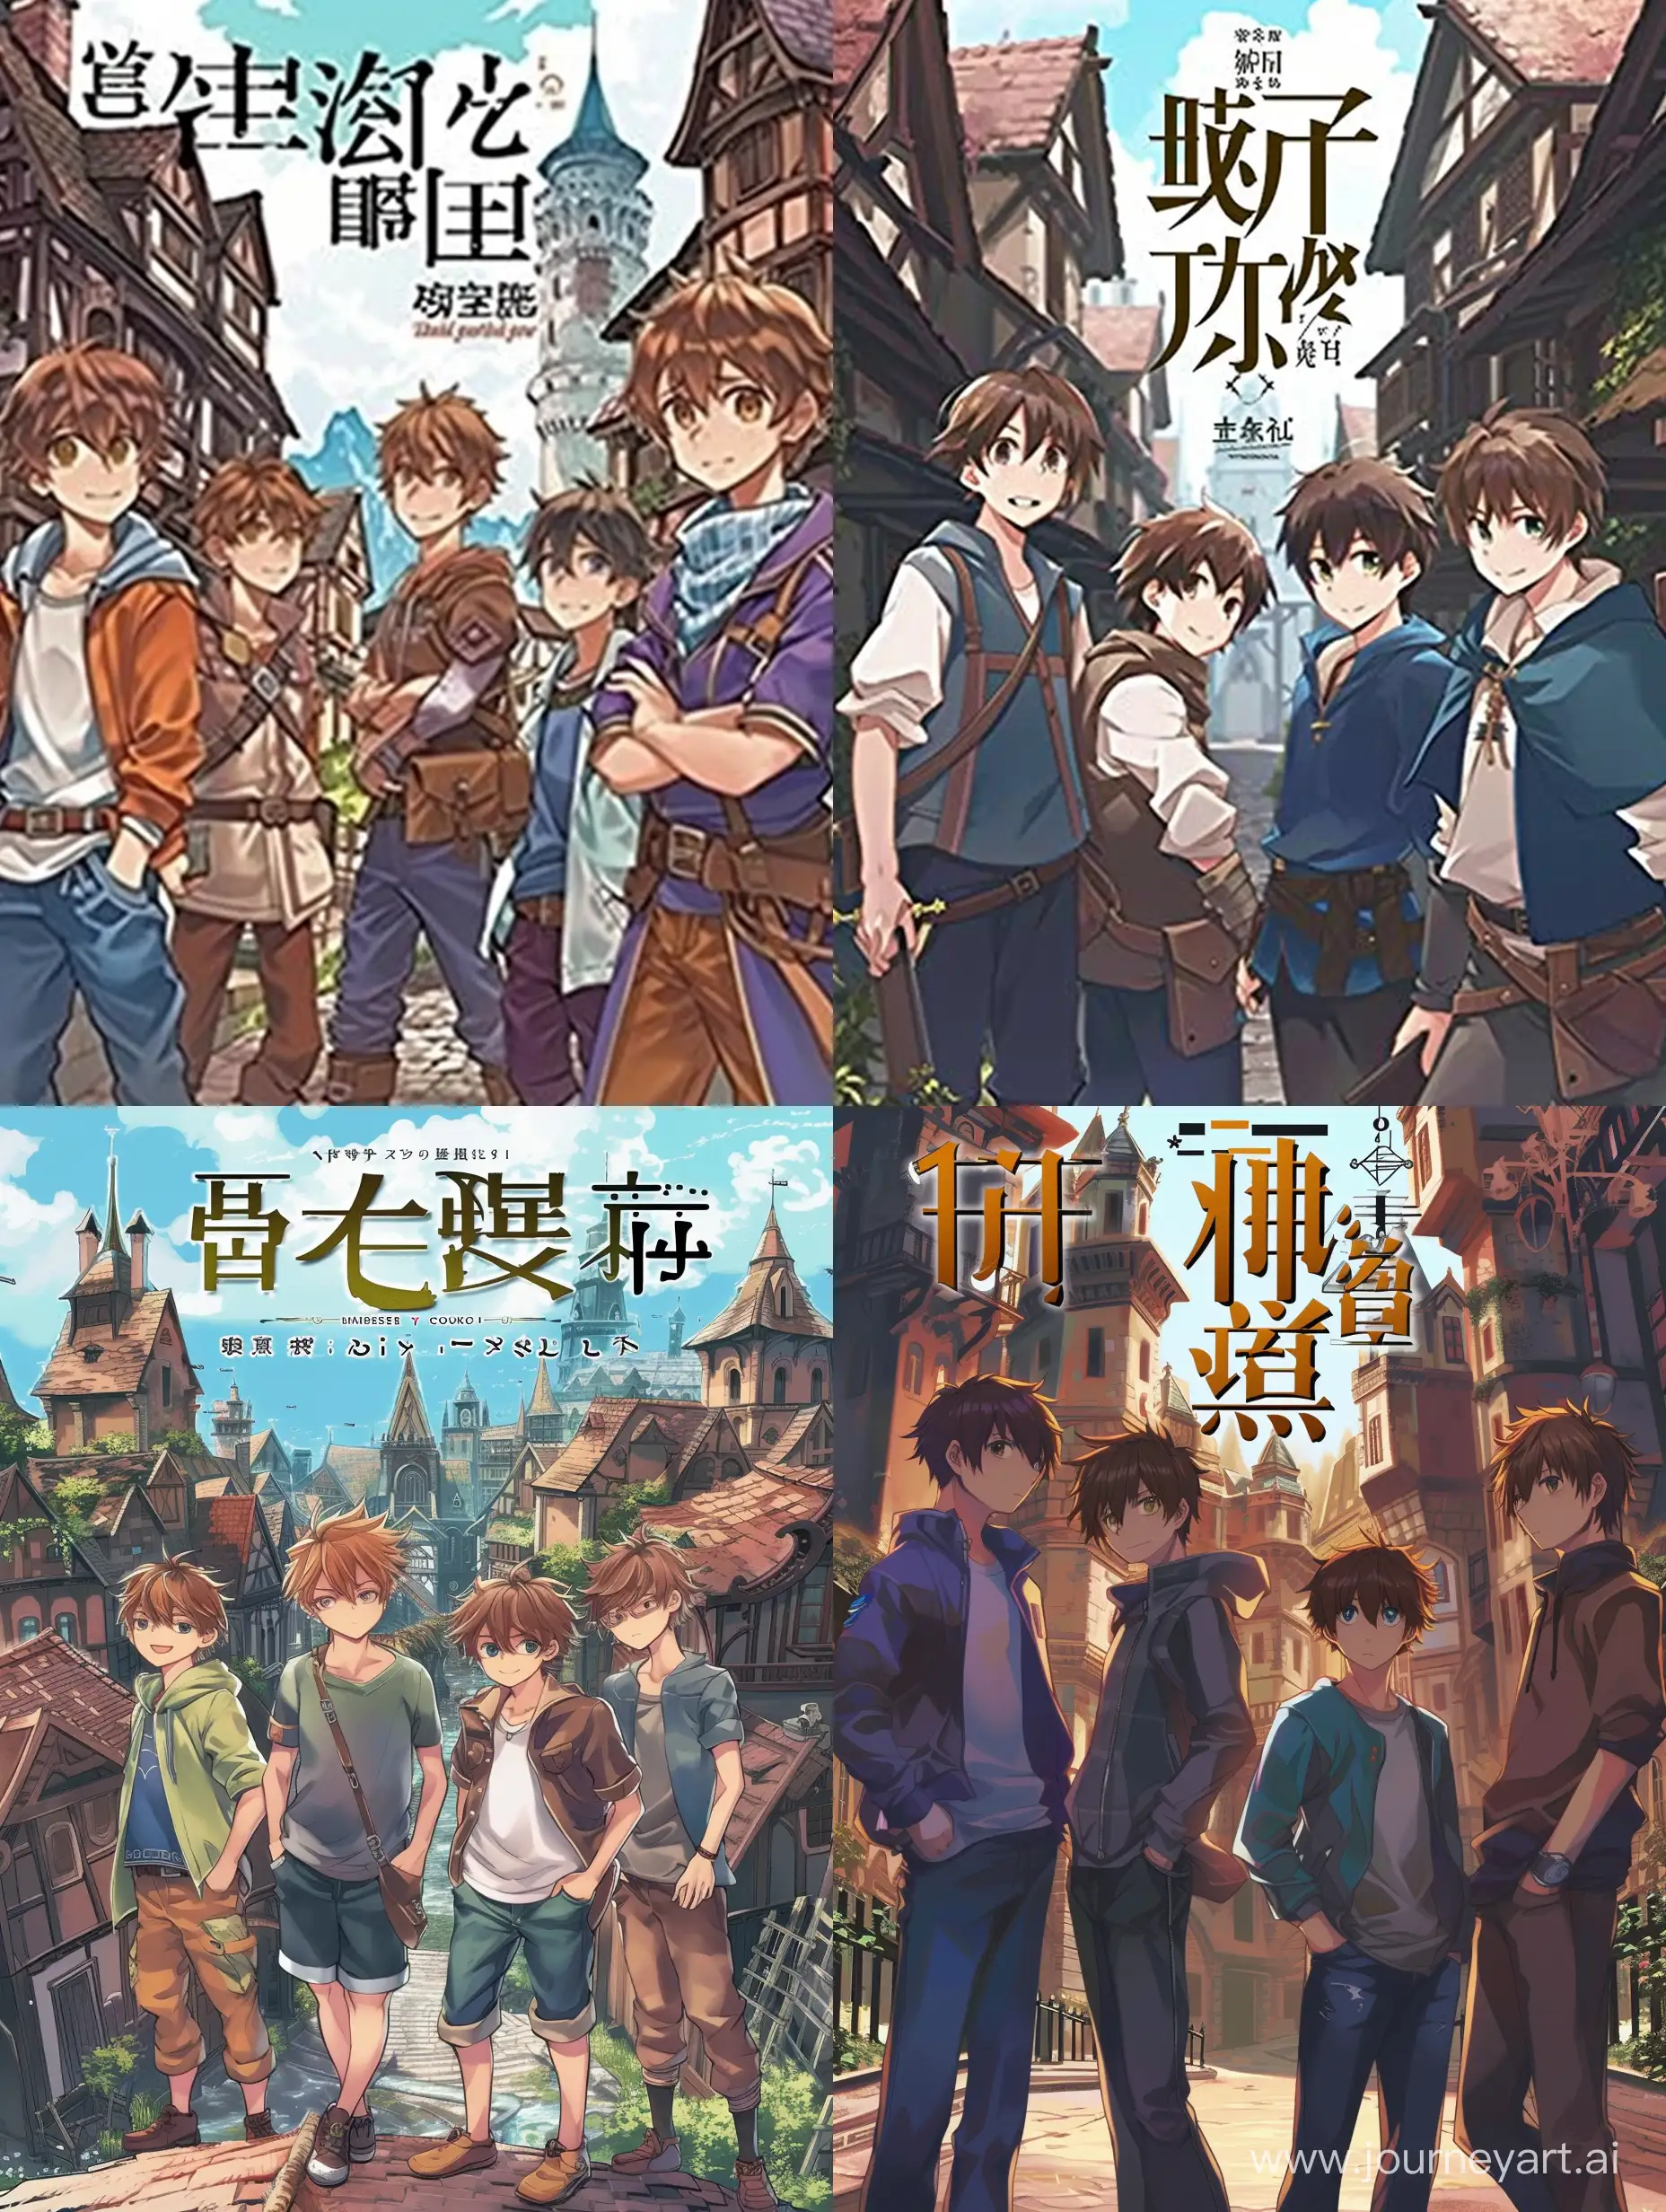 Four-Boys-in-Fantasy-World-with-Buildings-Light-Novel-Cover-Art